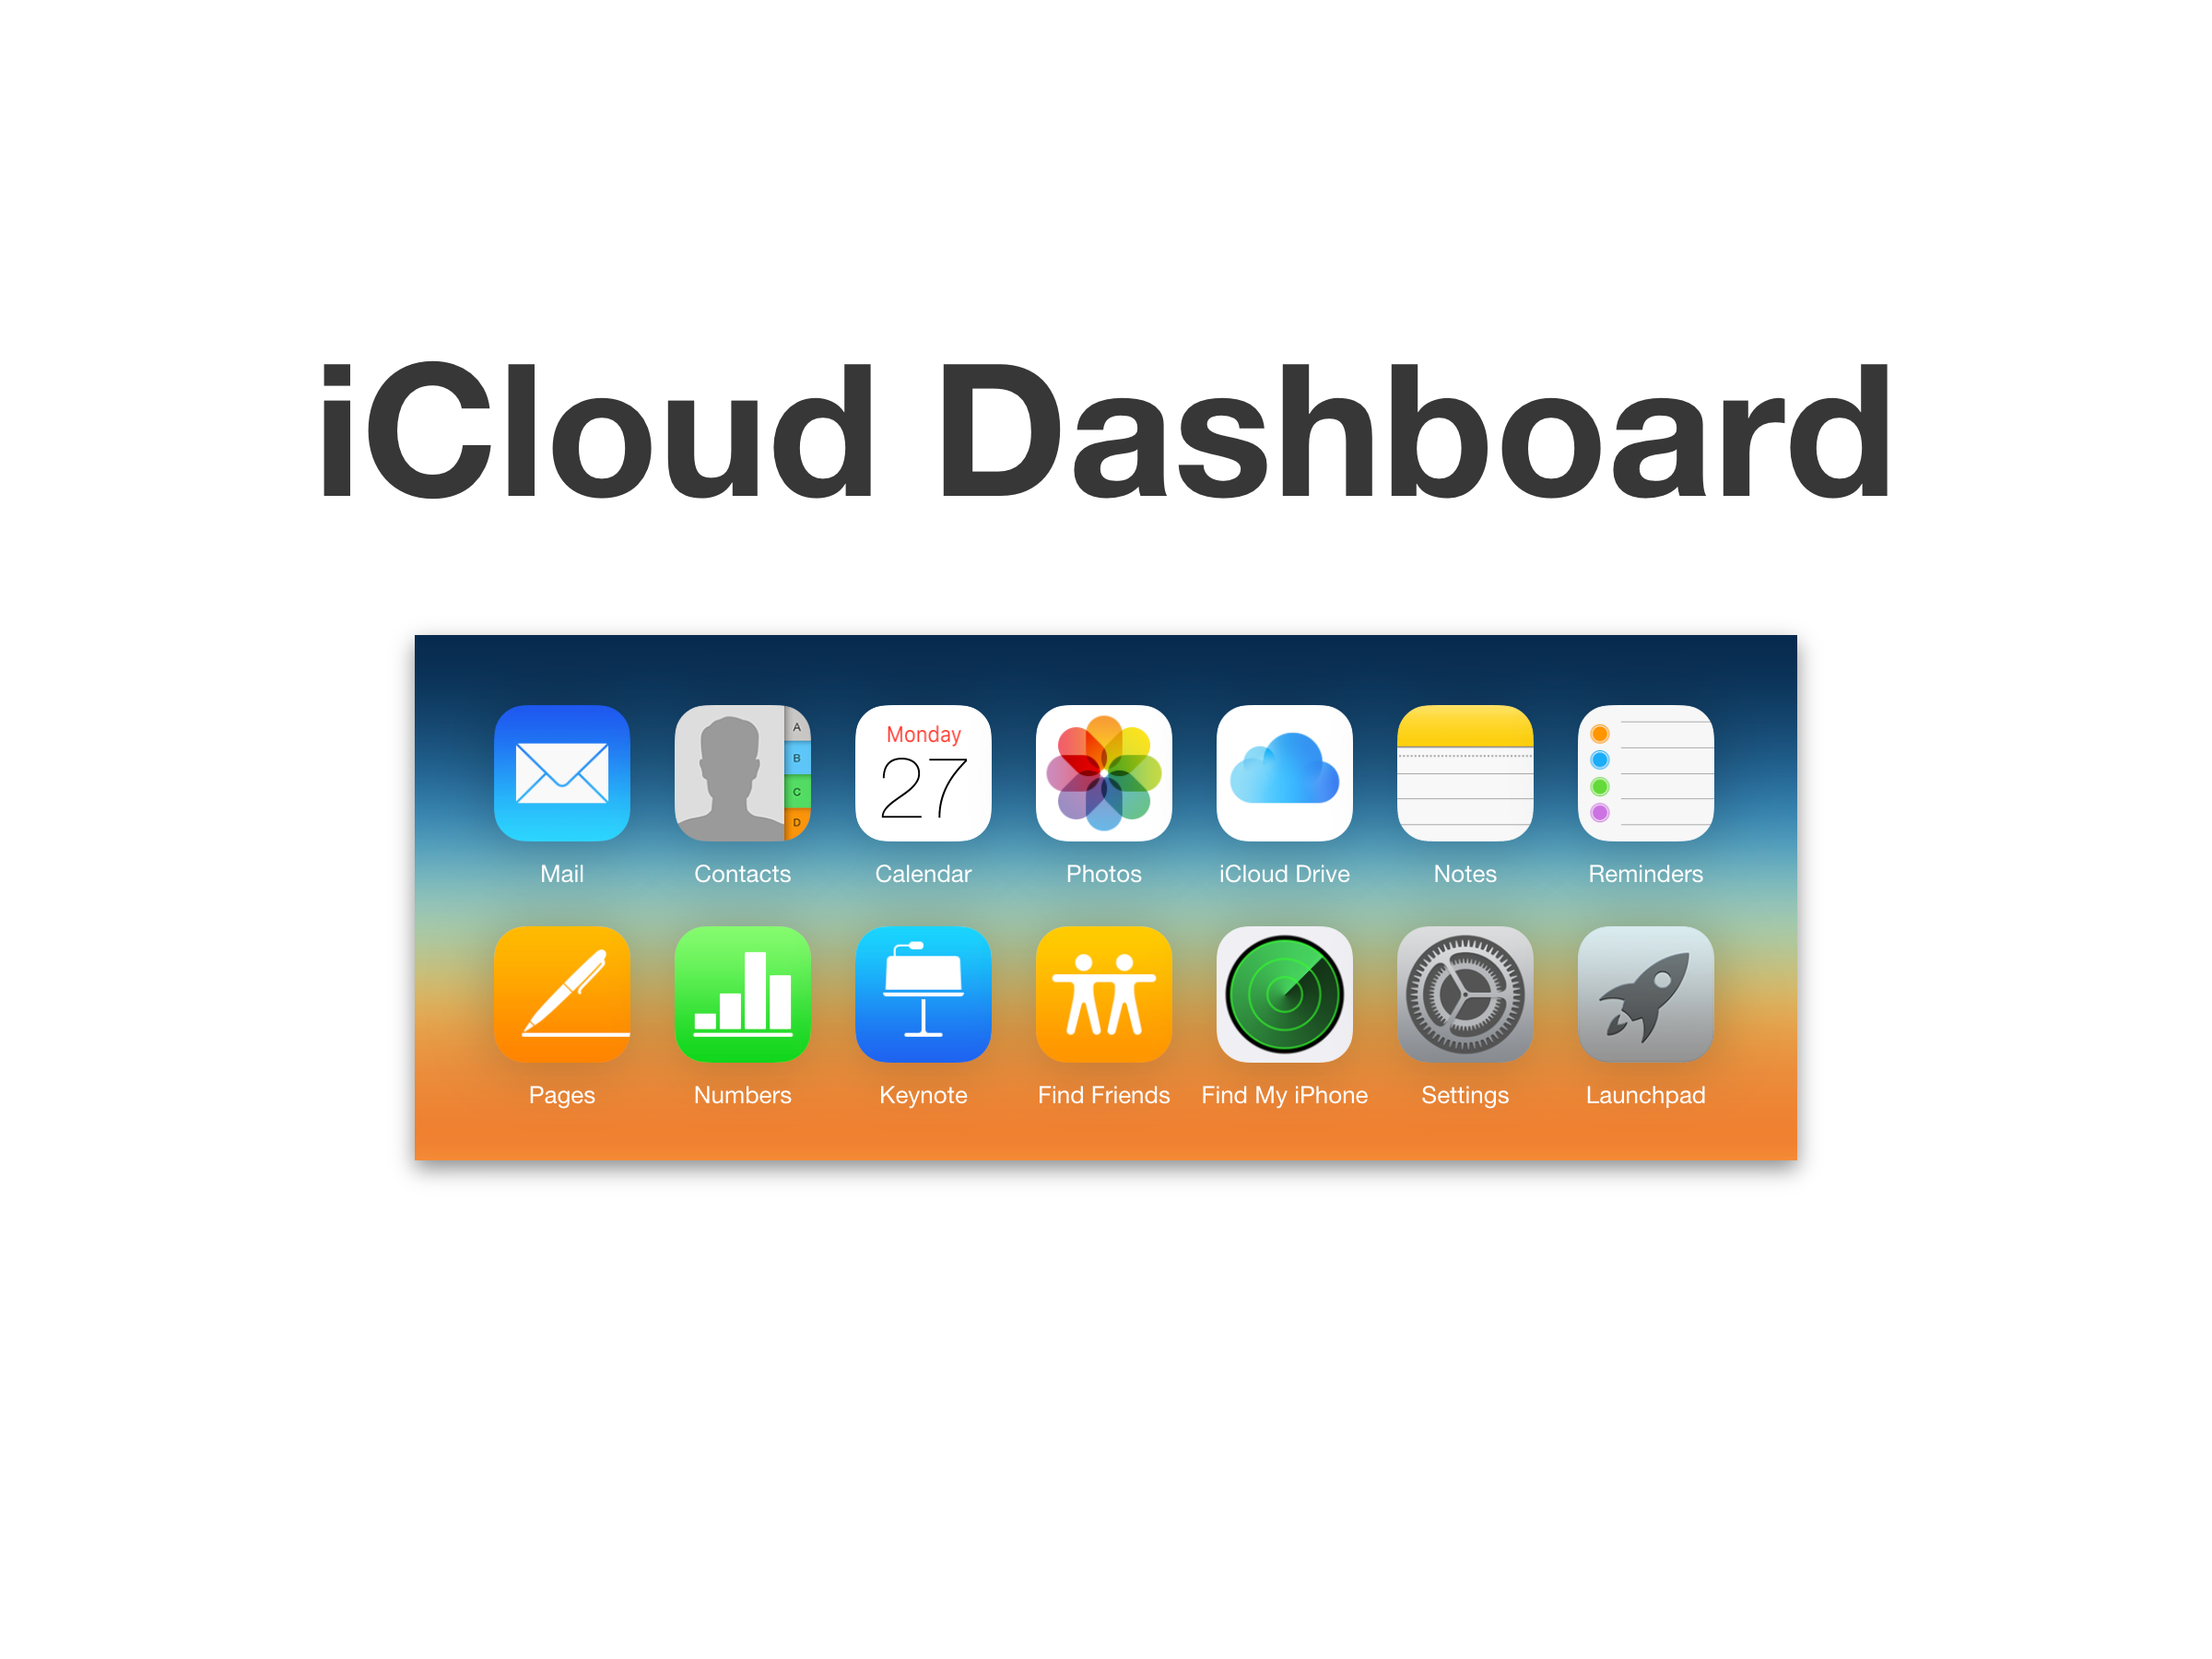 iCloud Dashboard promo image